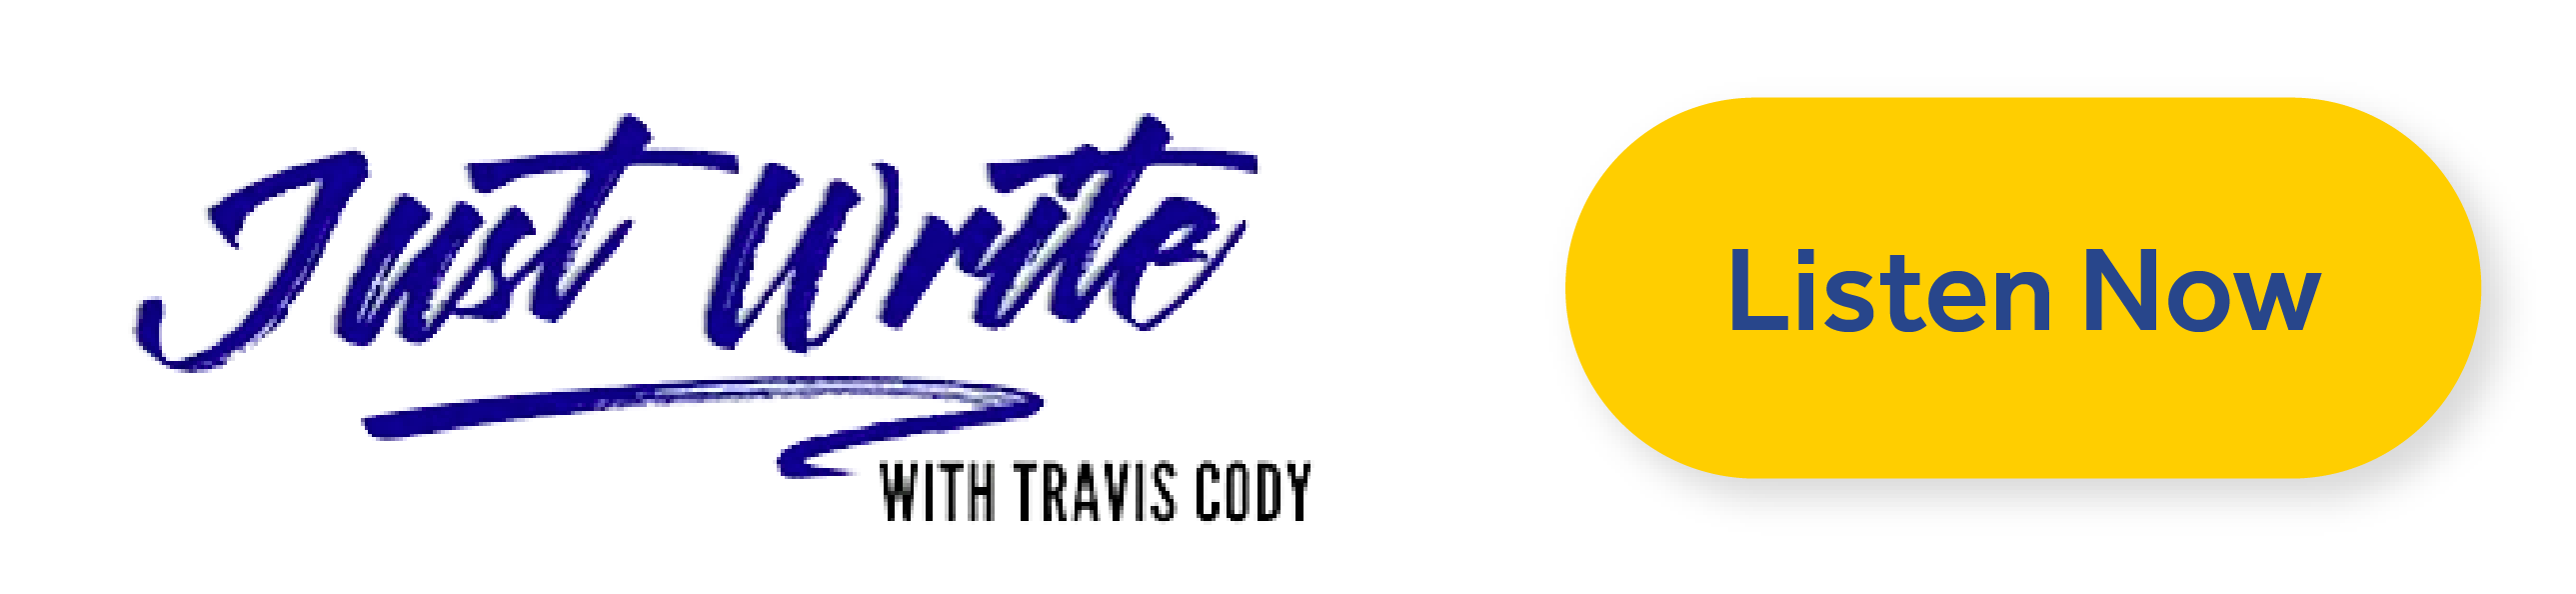 Travis Cody_Website_About-09